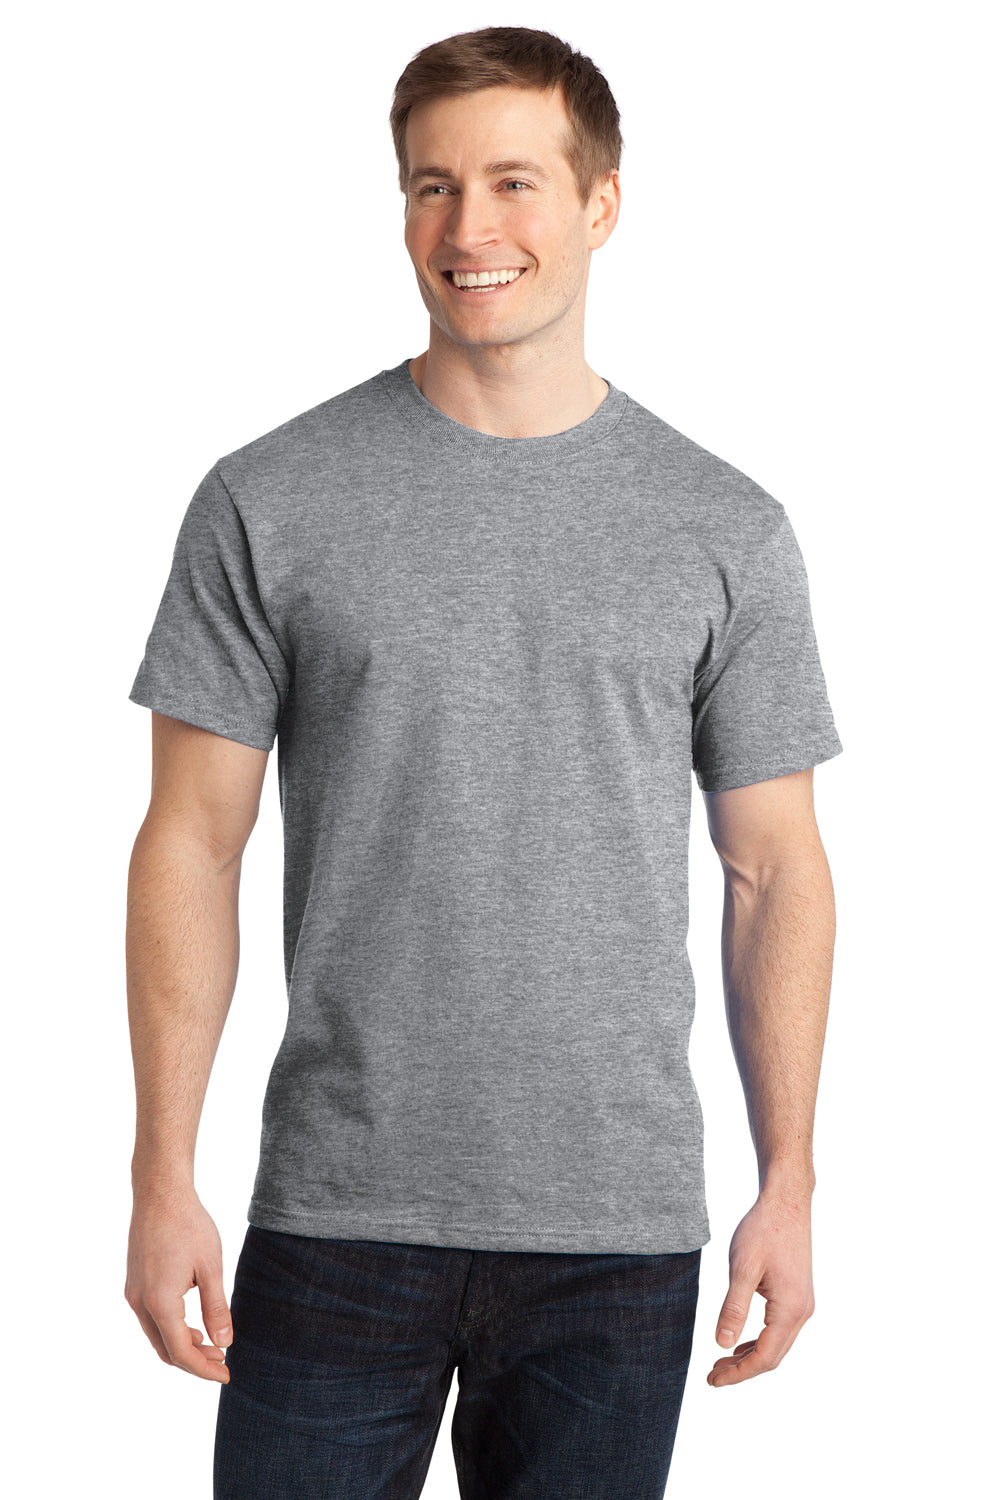 Port & Company PC150 Mens Short Sleeve Crewneck T-Shirt Heather Grey Front